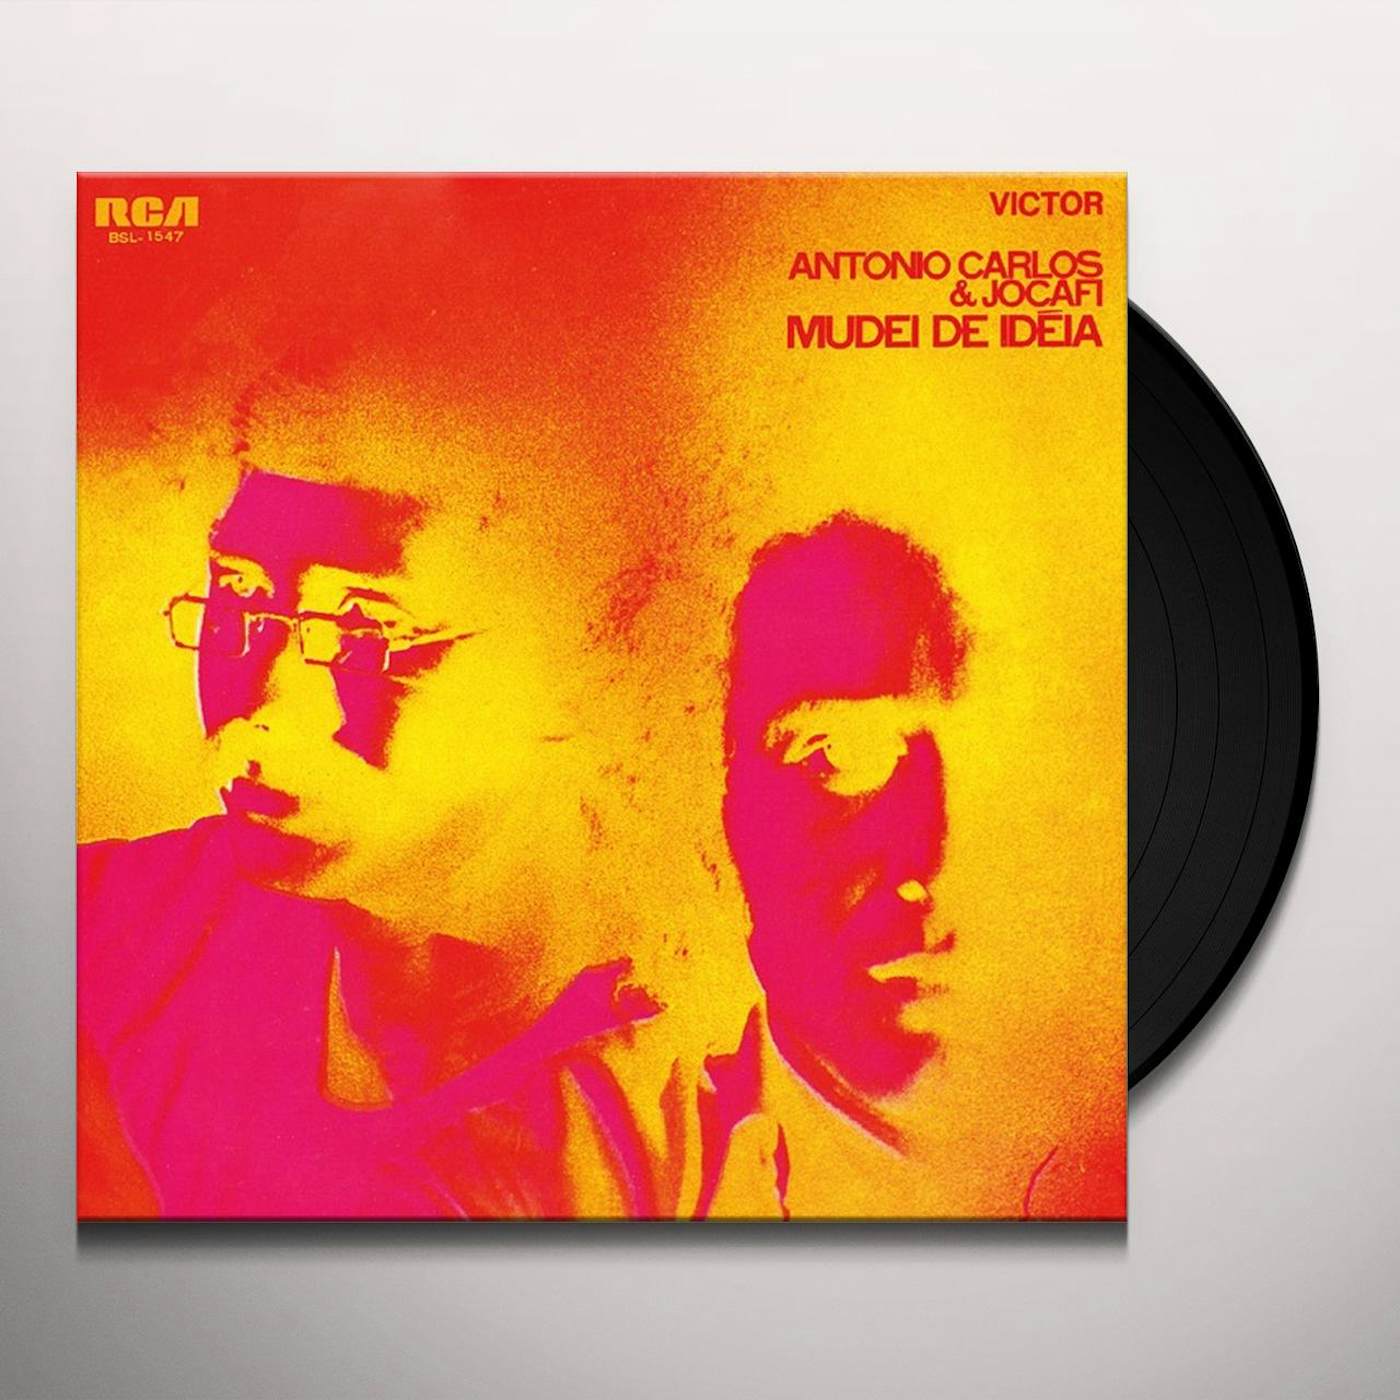 Antonio Carlos & Jocafi Mudei de Ideia Vinyl Record